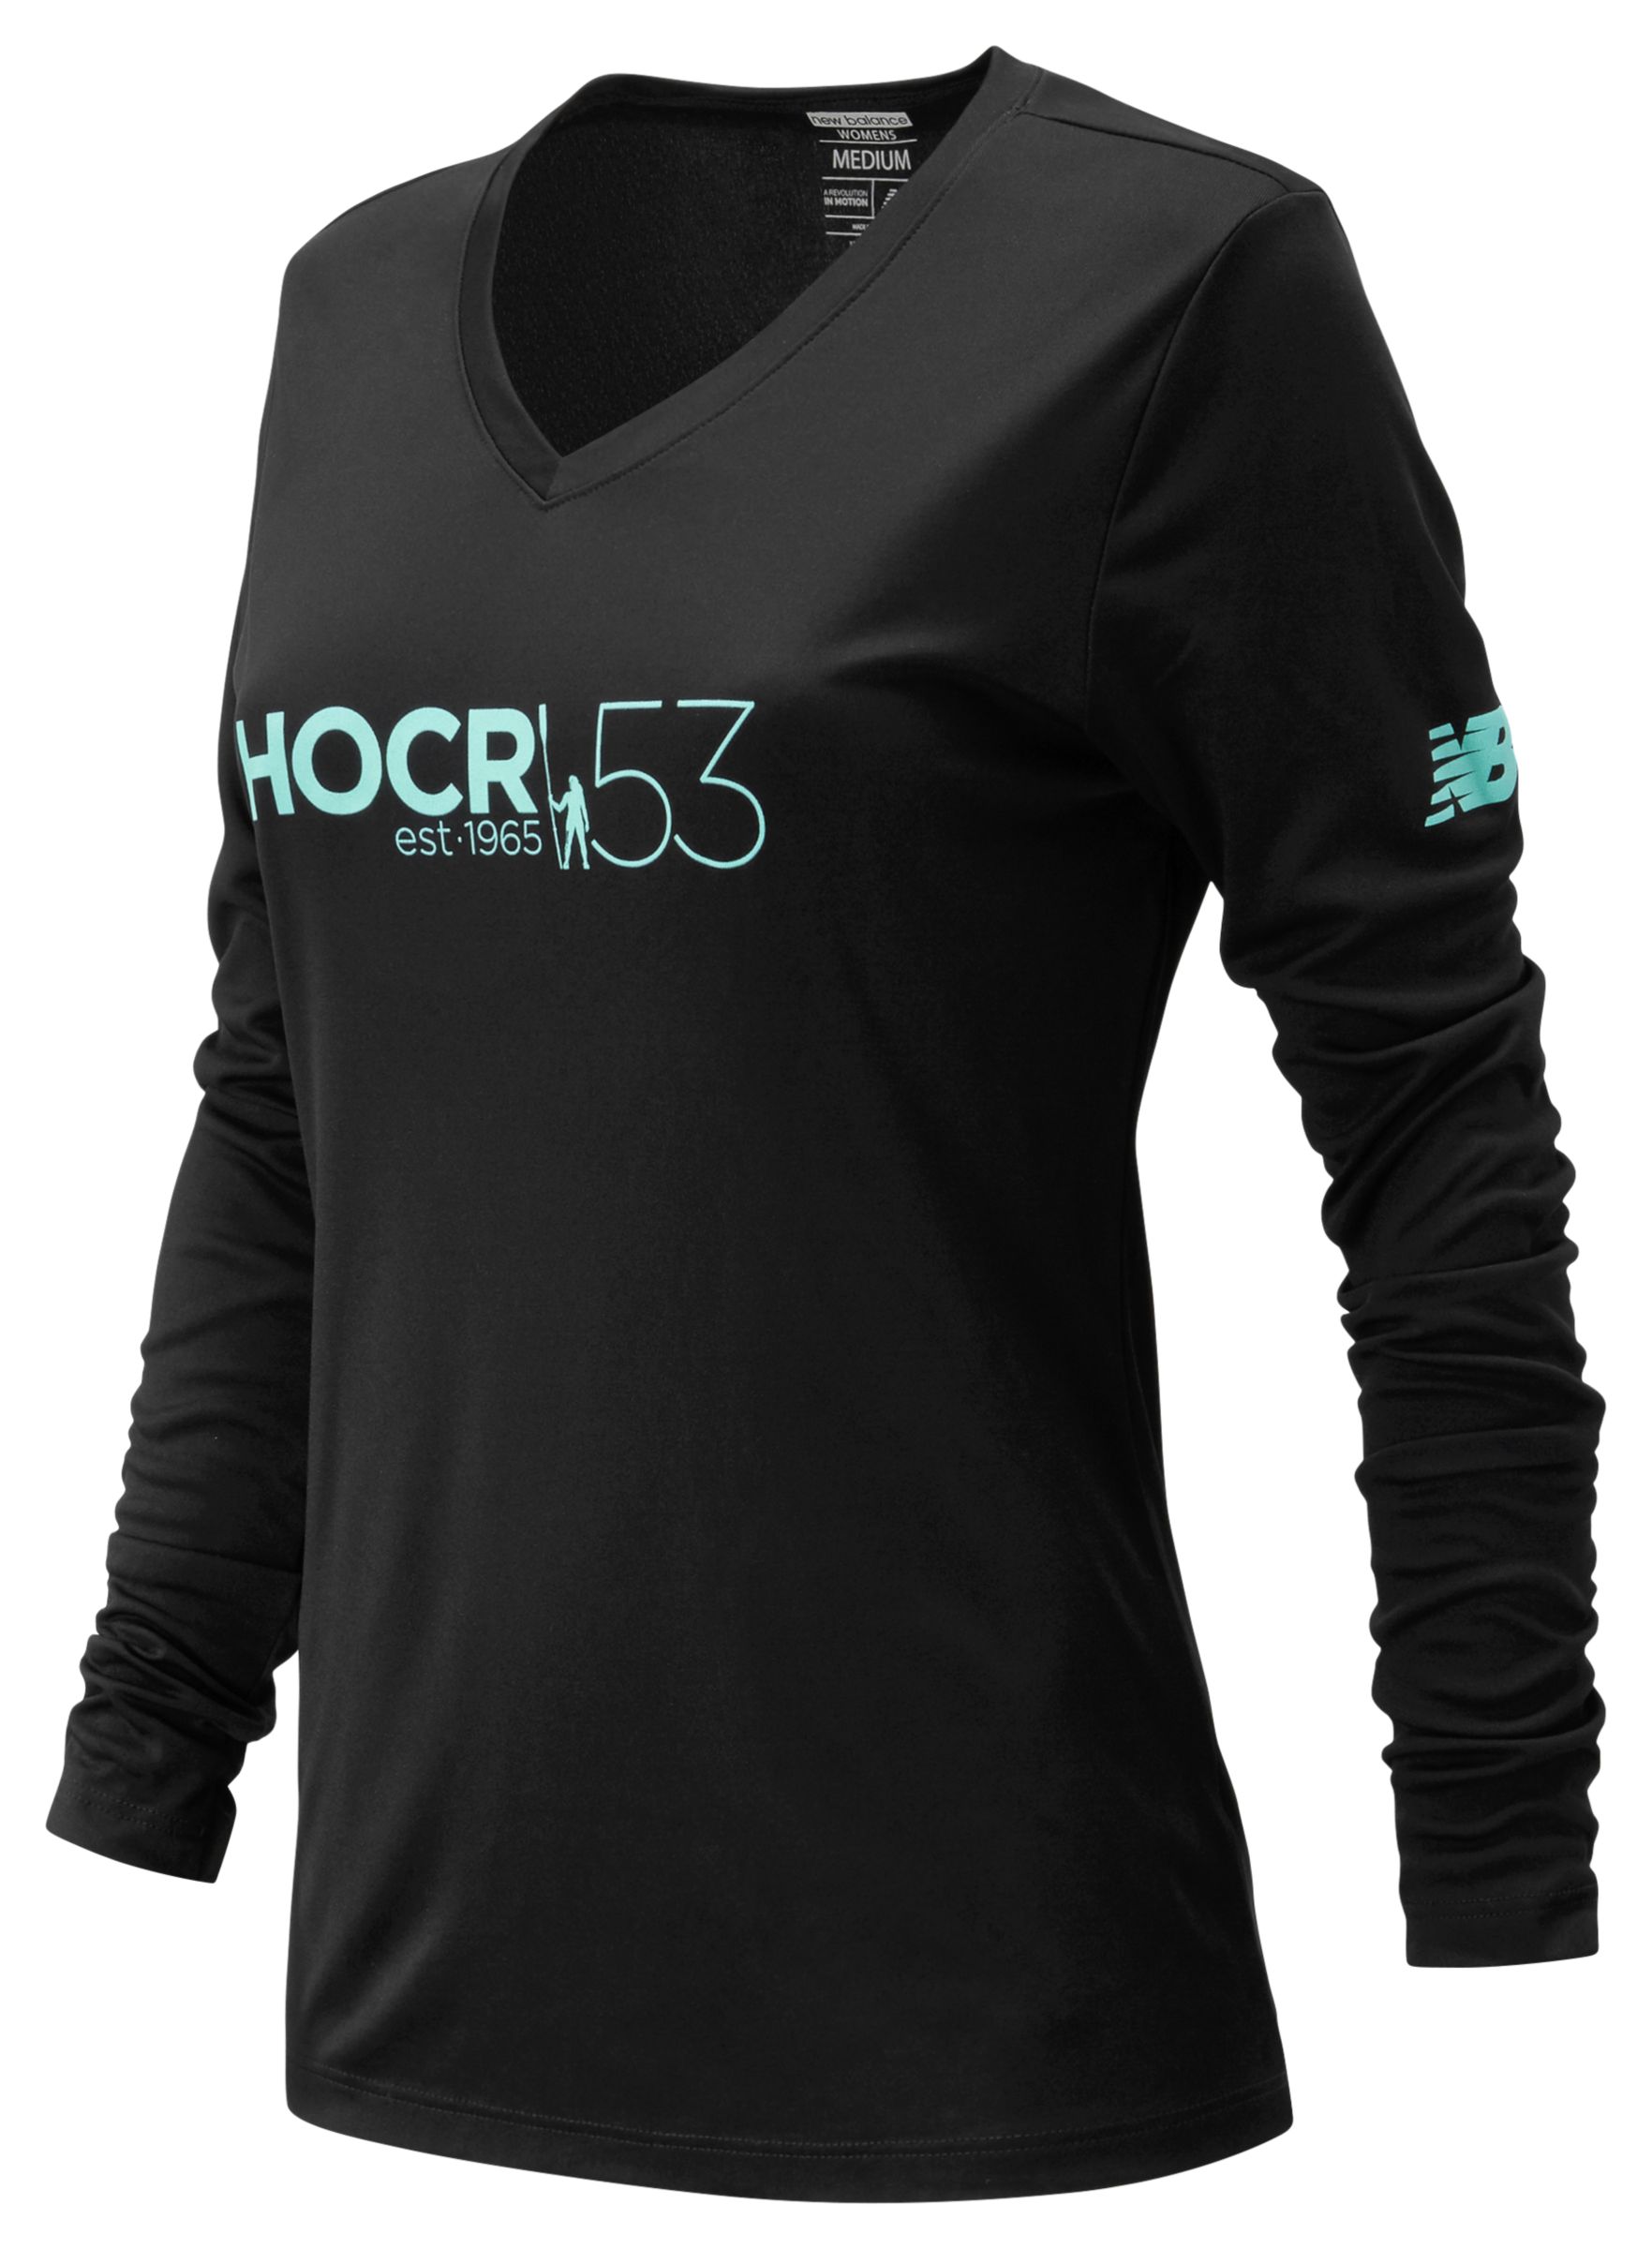 HOCR Long Sleeve Tech - Women's 73982 - Tops, Performance - New Balance